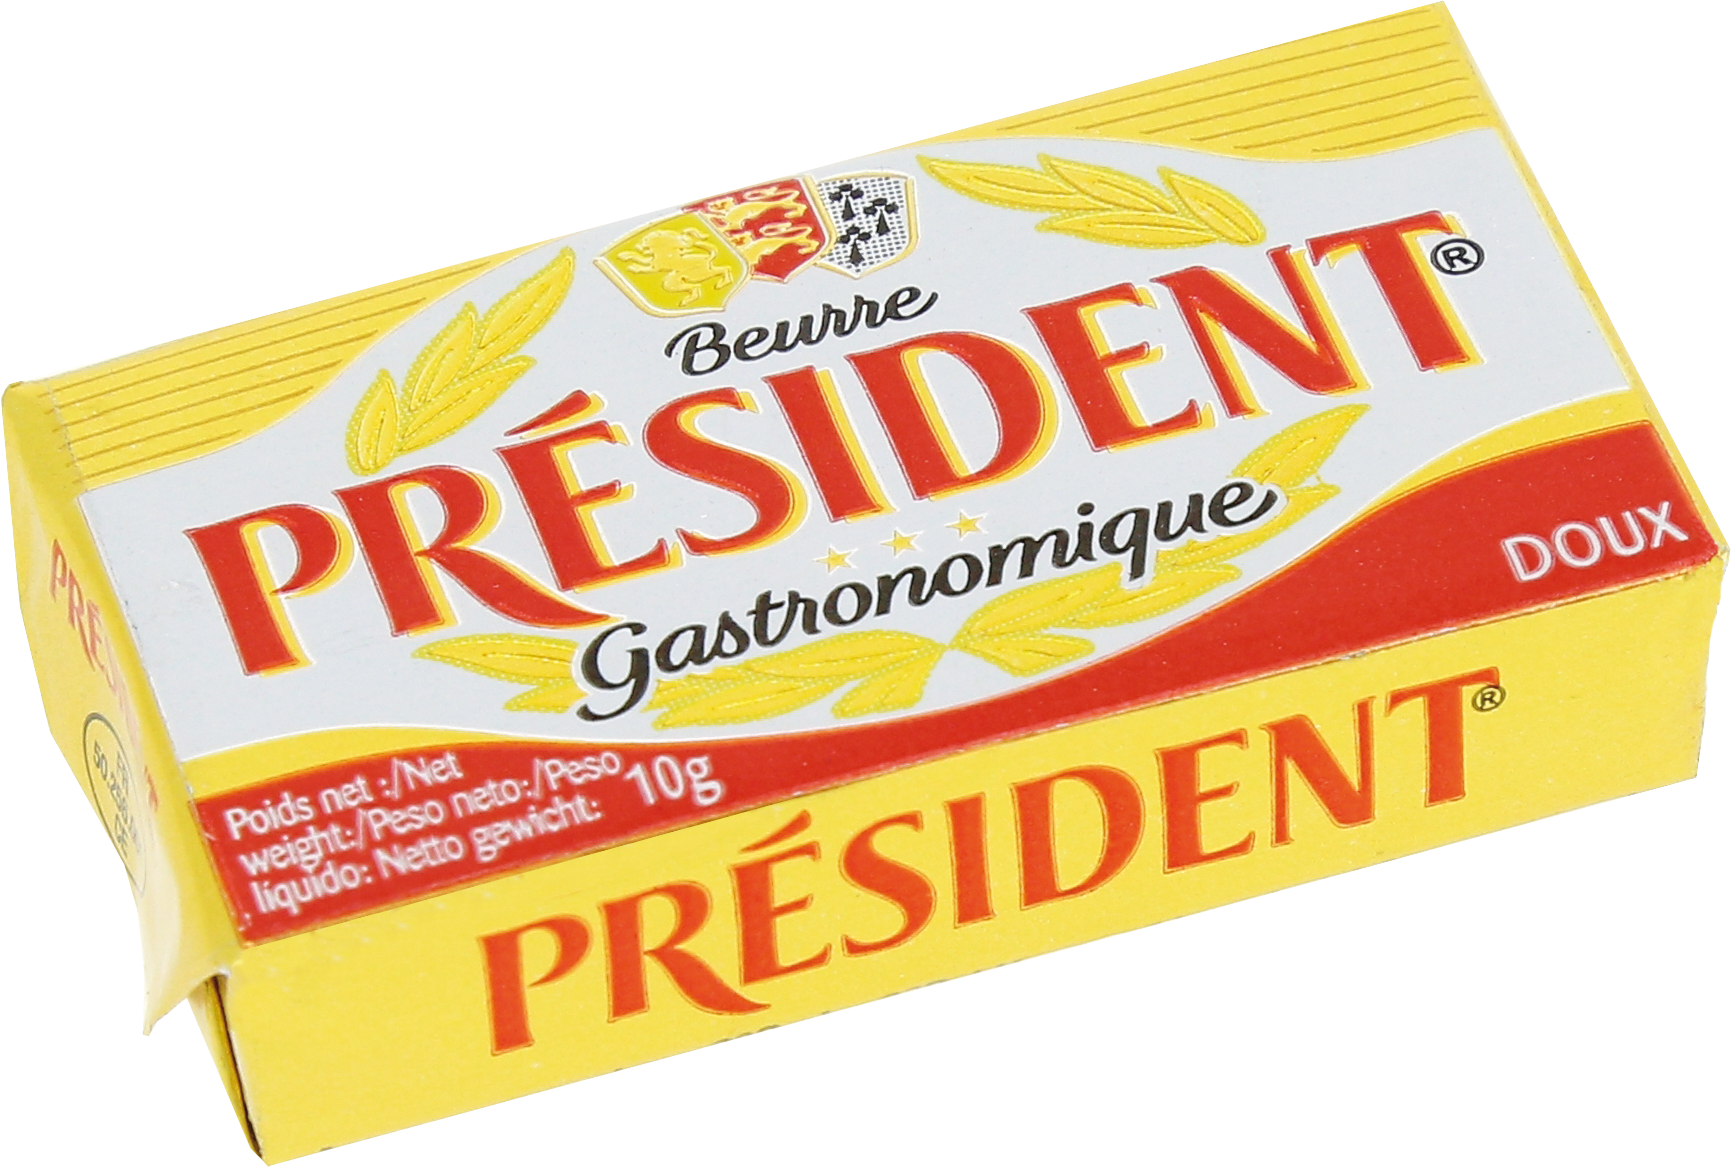 President portions beurre micropains 10gr alu 100pc Gastronomique